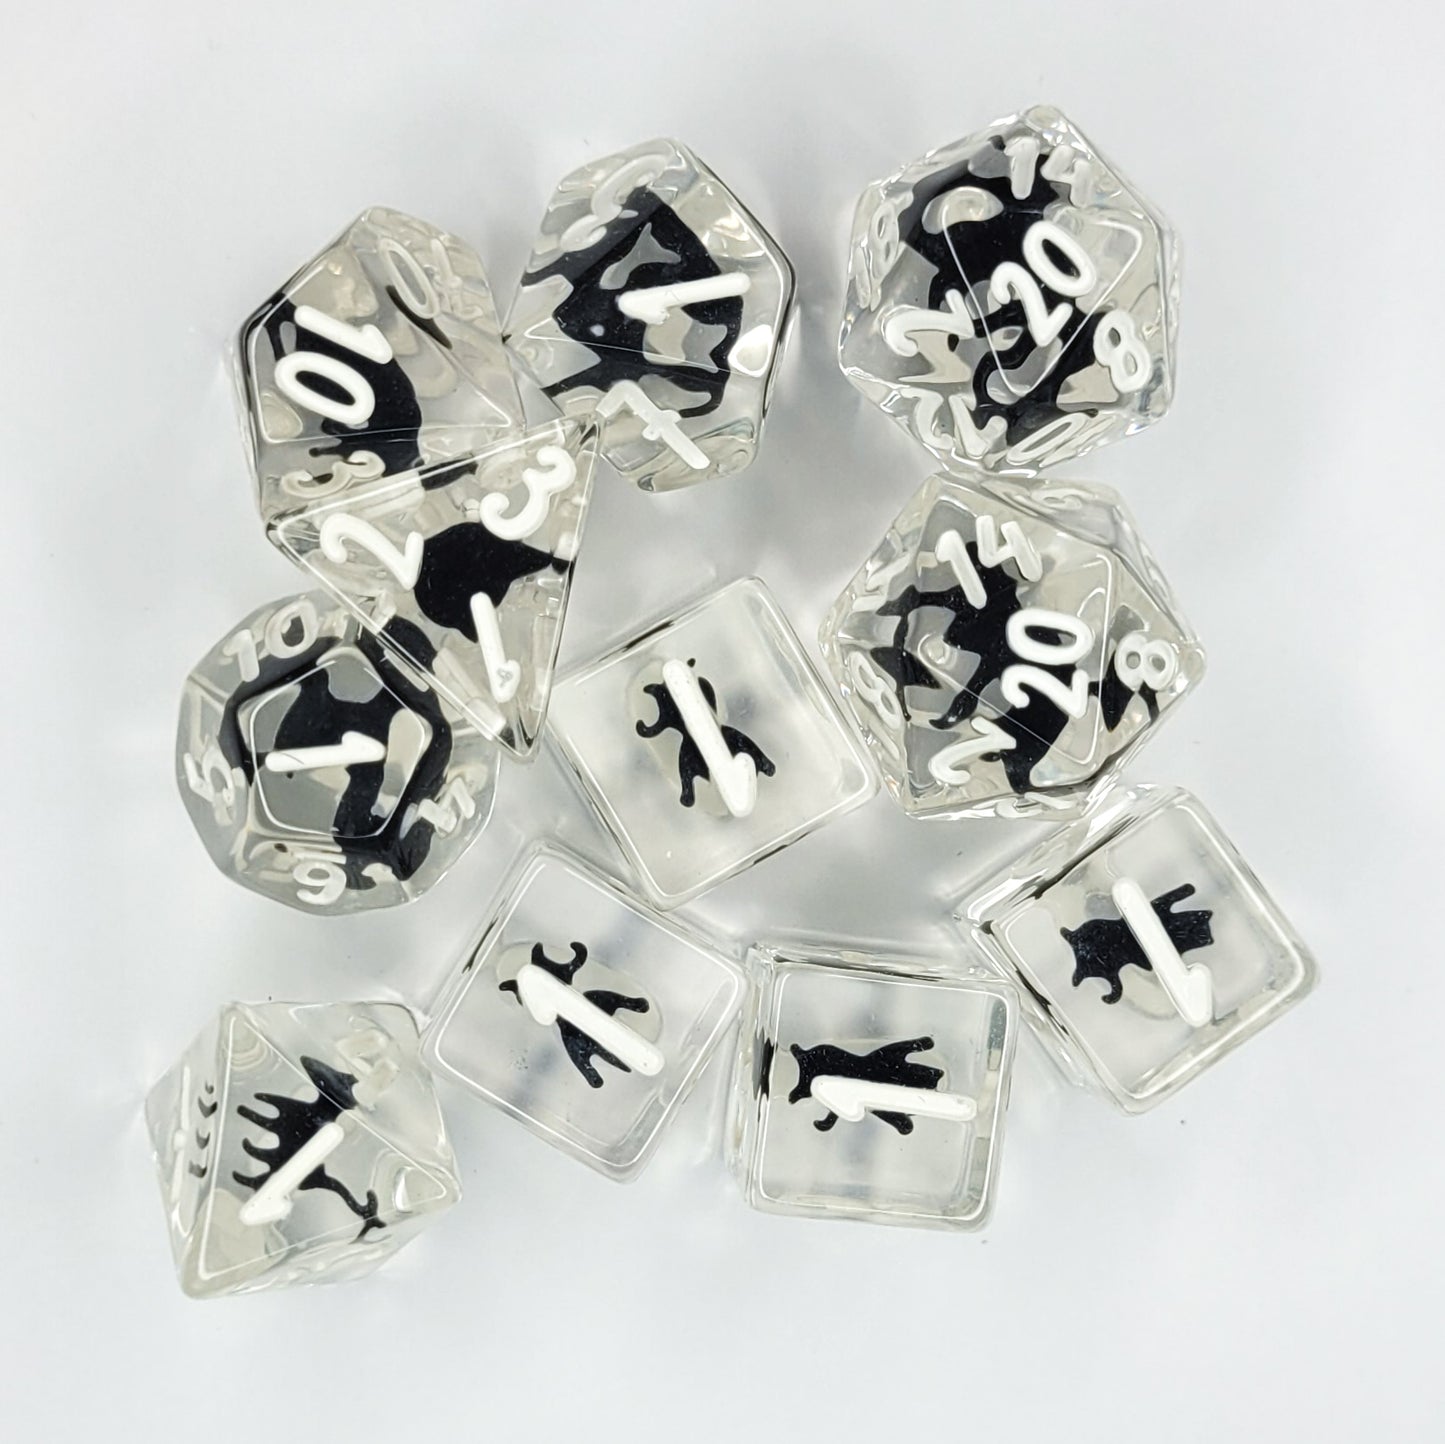 Purryhedrals Black Cat soft-edge dice - 11 piece dice set